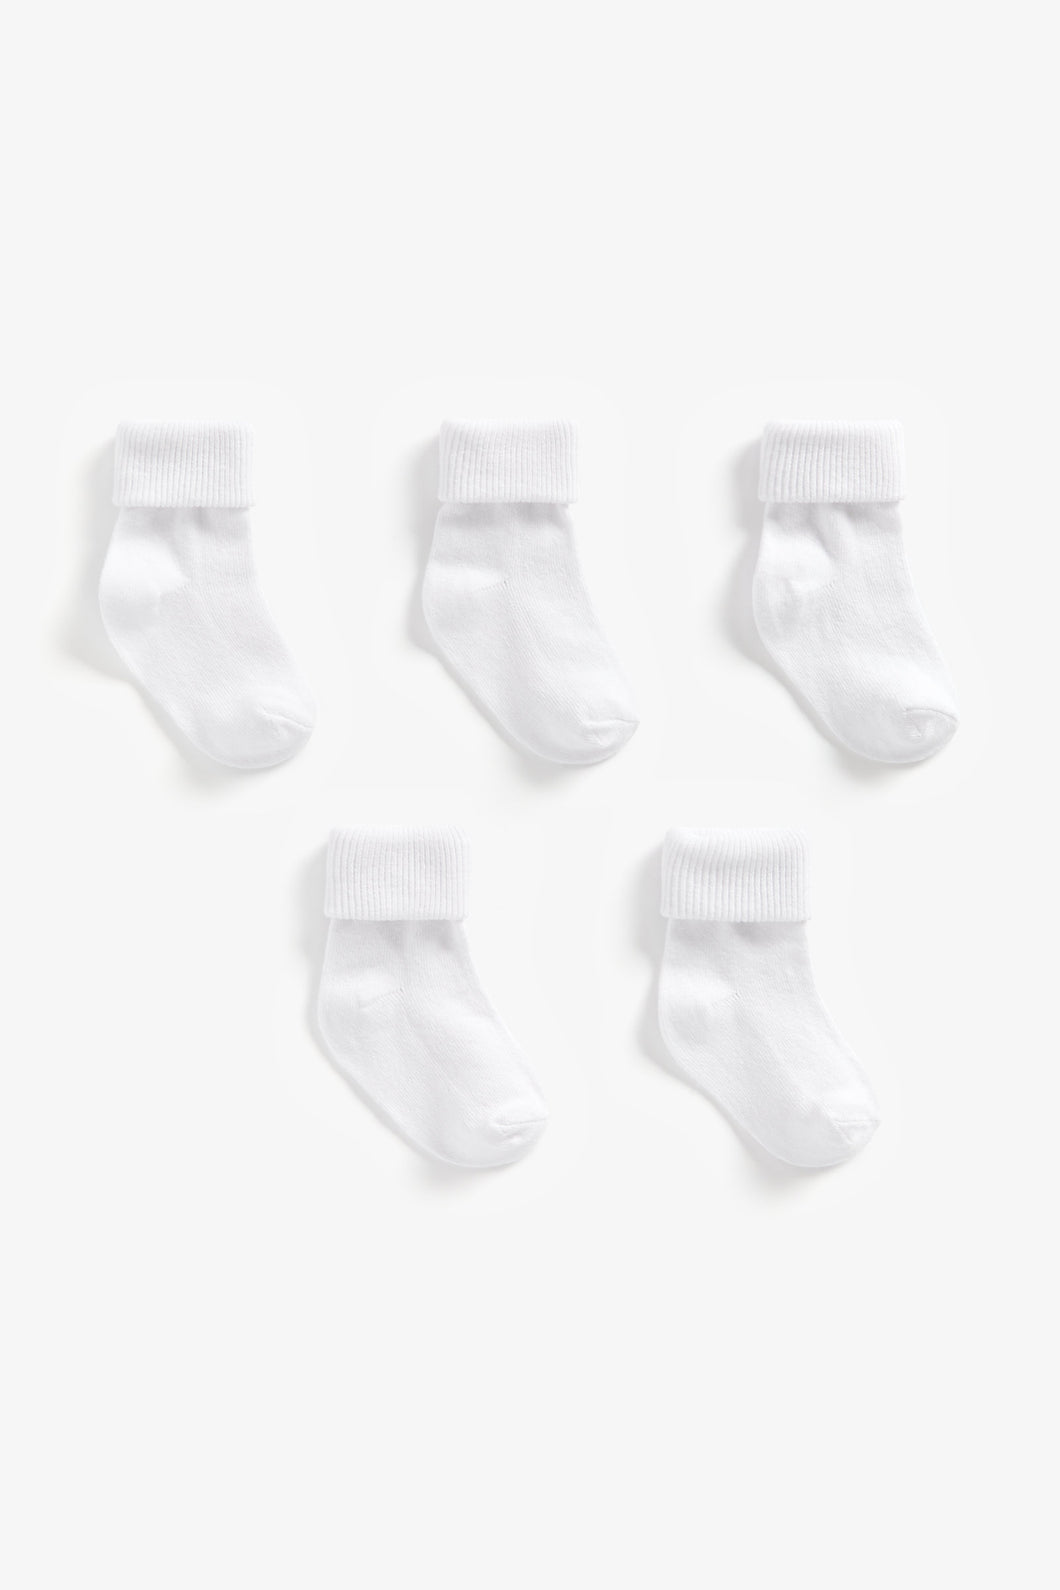 Mothercare White Turn-Over-Top Socks - 5 Pack